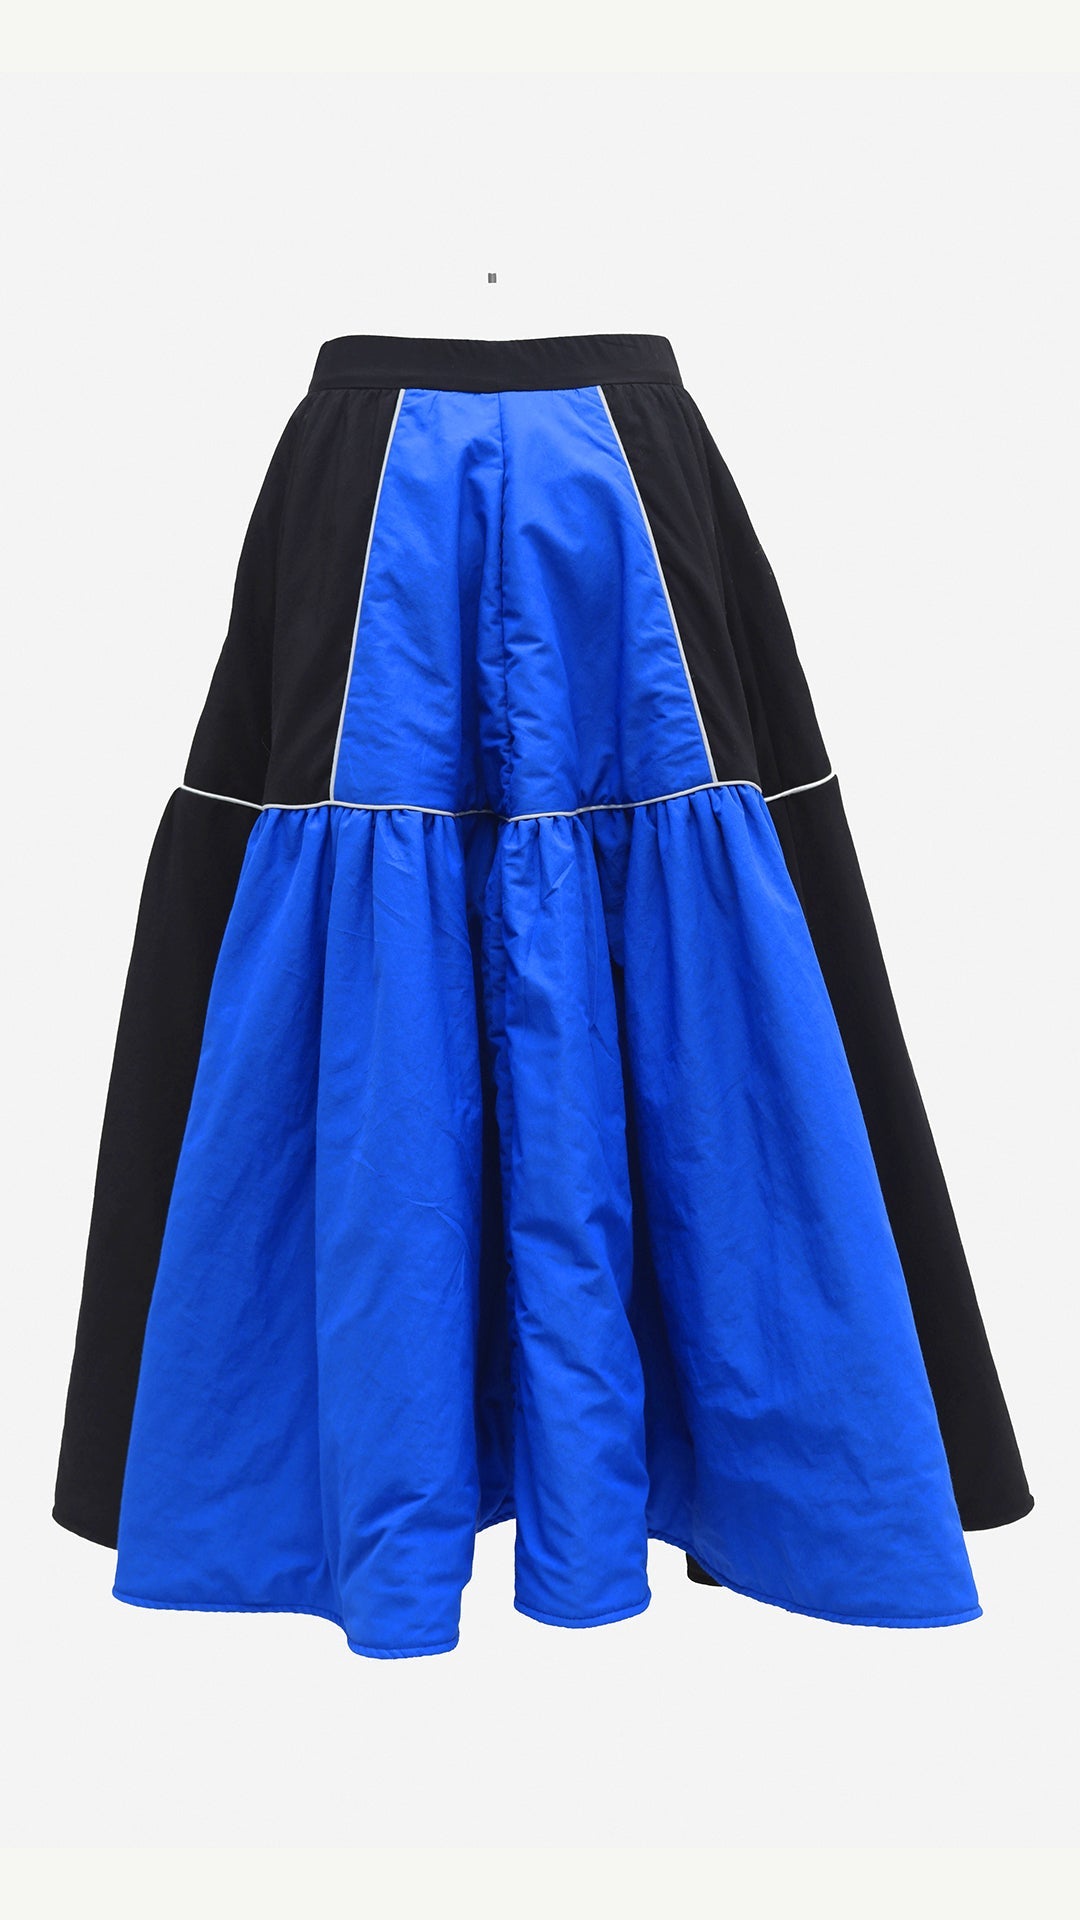 Essex Skirt (Sample Product)